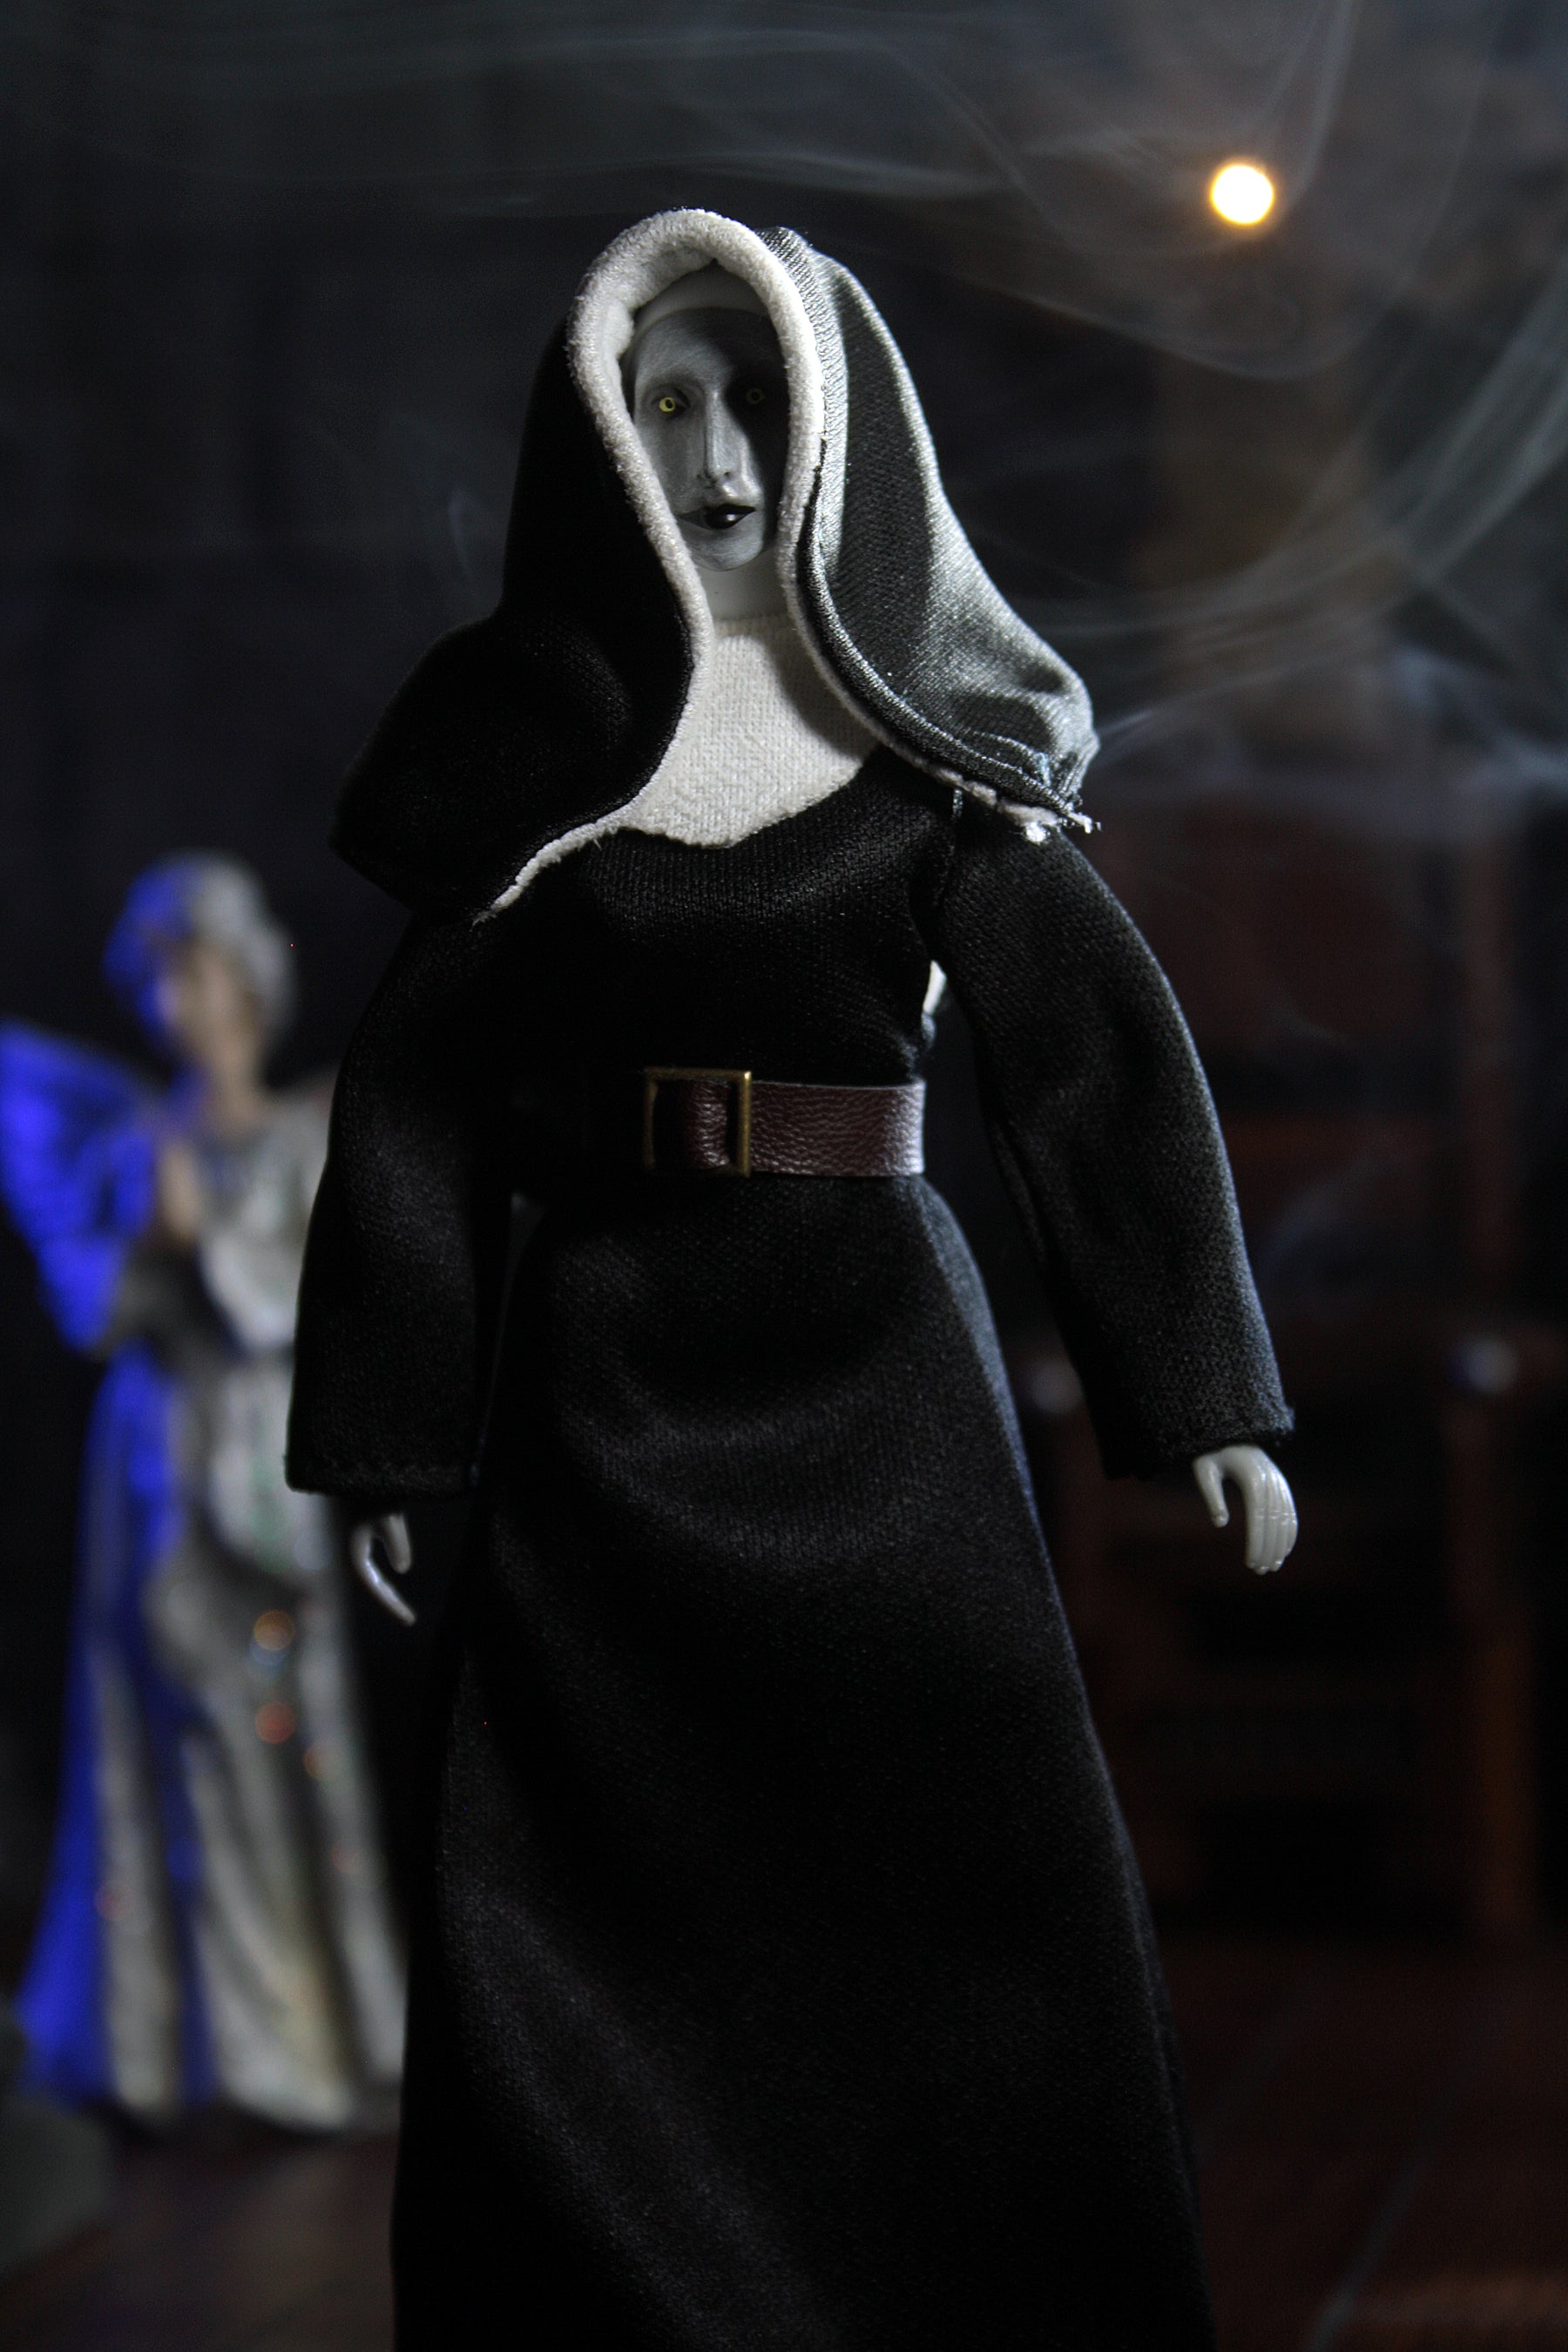 Mego Horror Wave 14 - The Nun 8" Action Figure